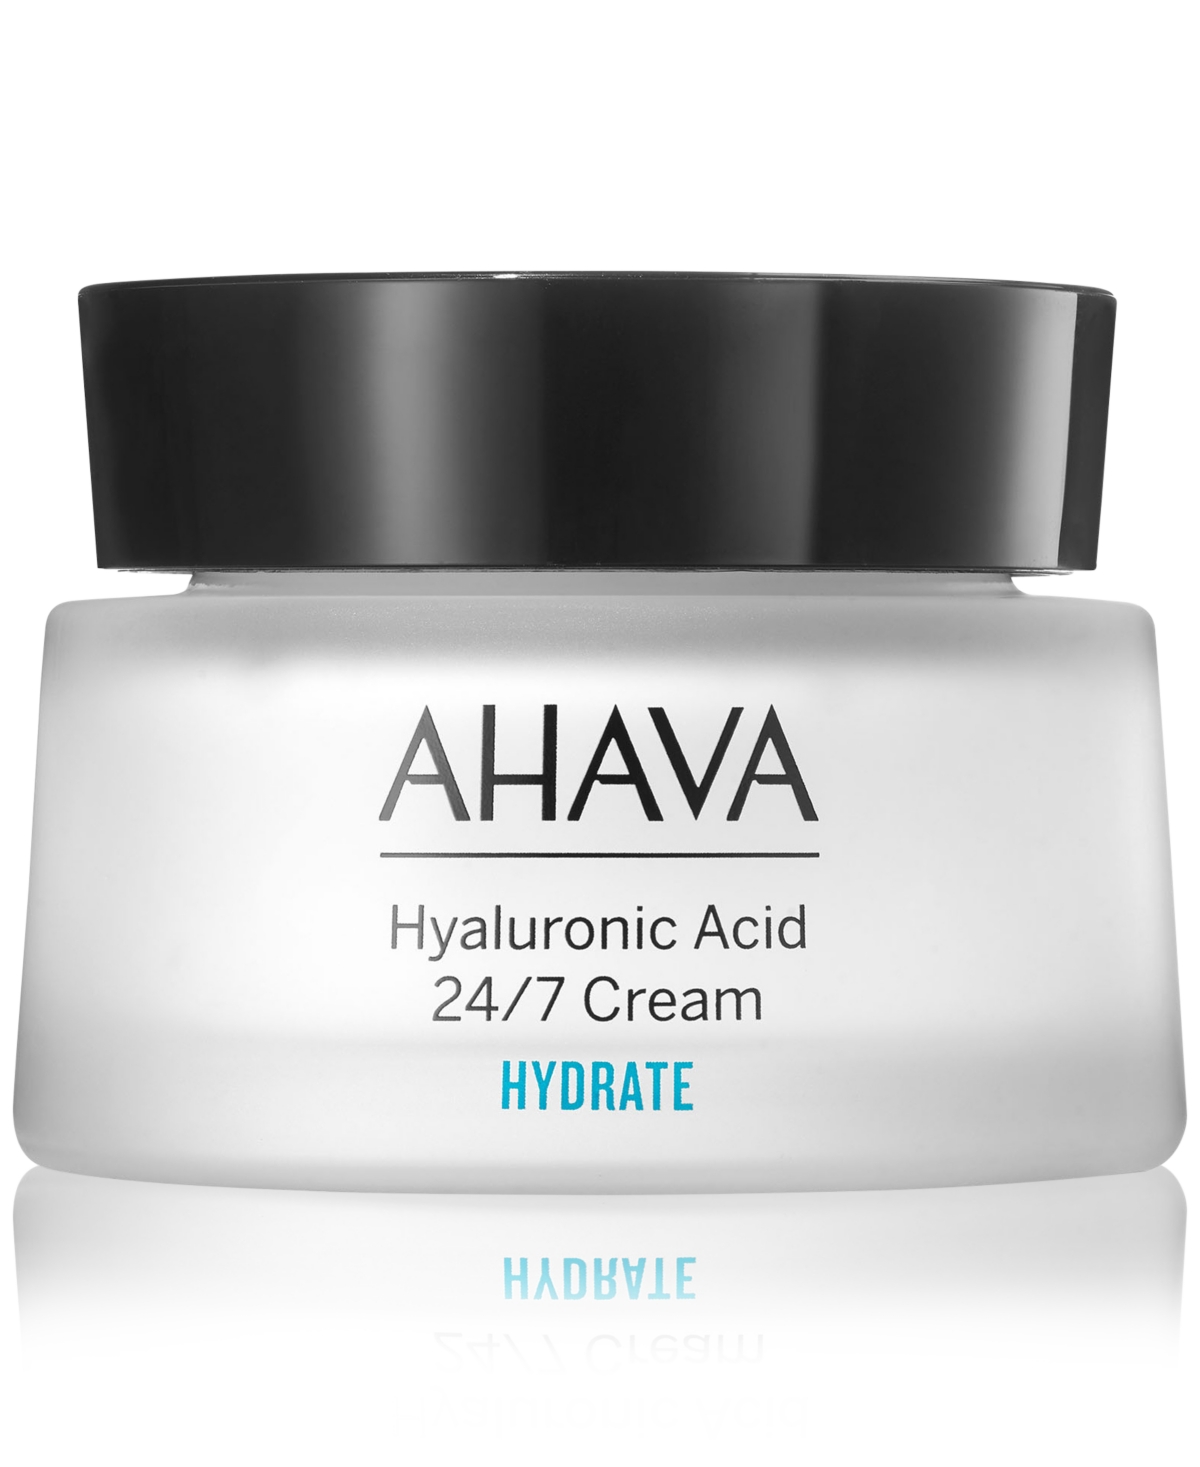 Ahava Hyaluronic Acid 24/7 Cream